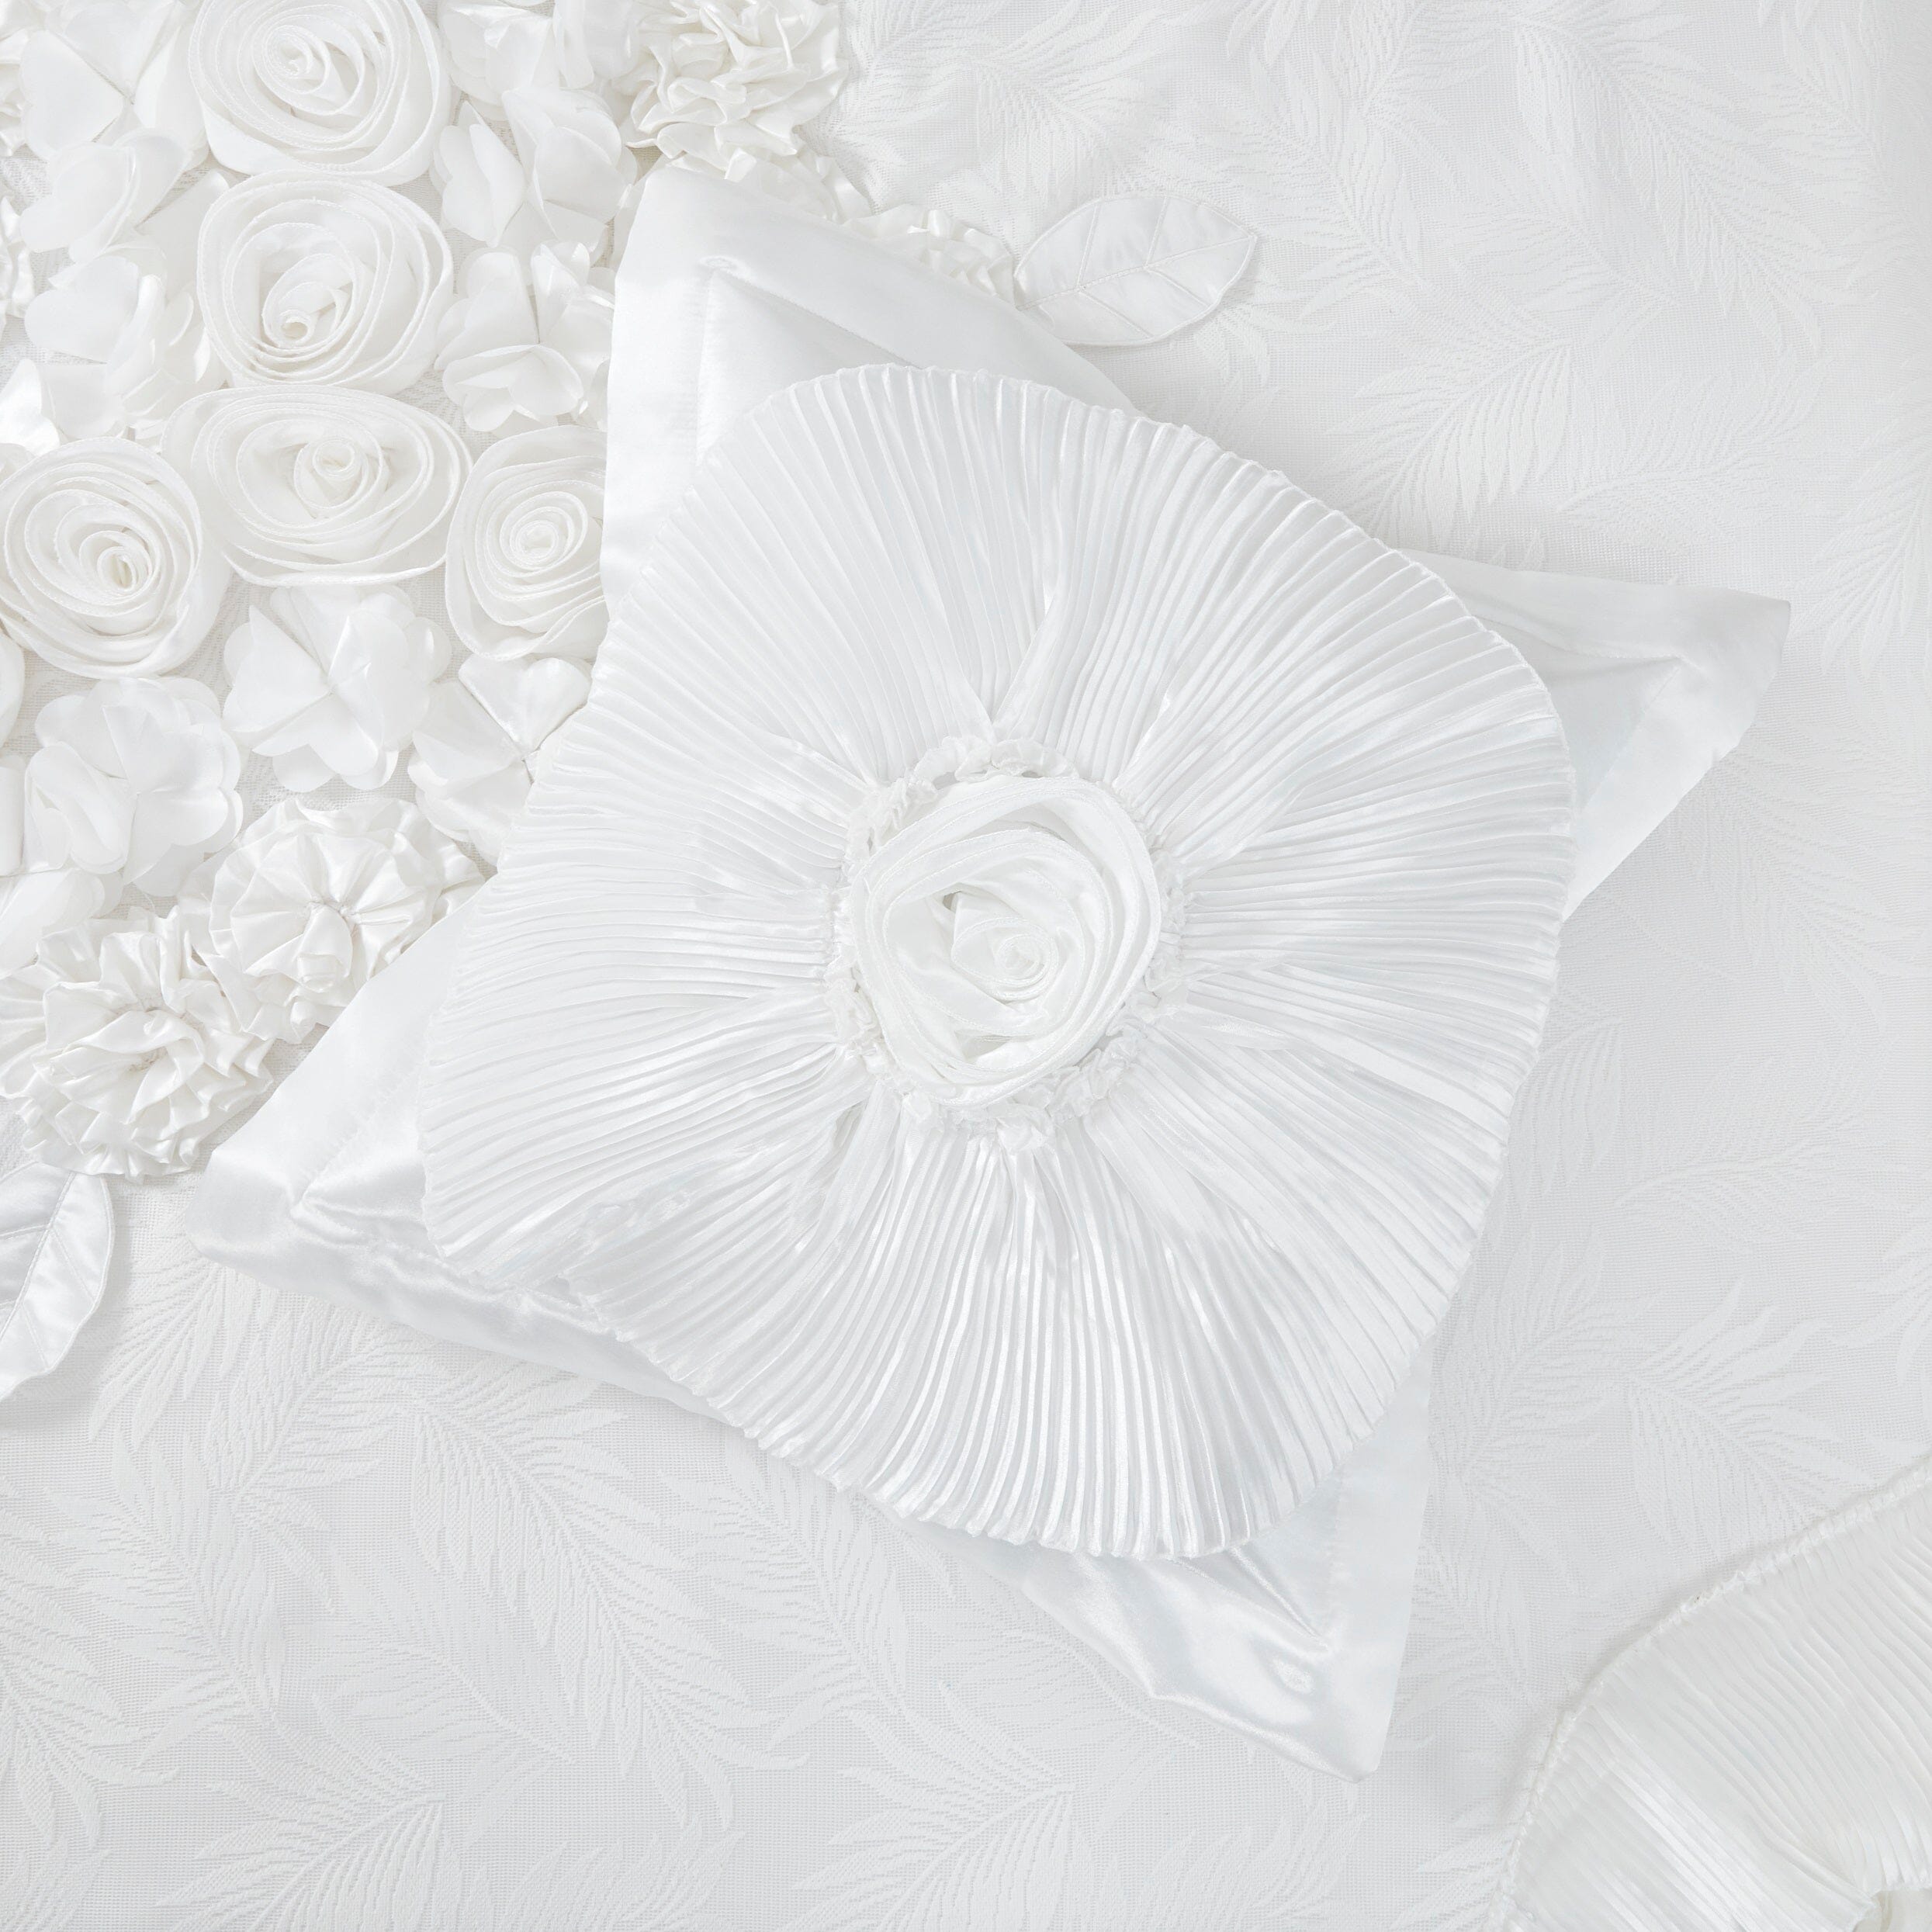 Tache Satin Floral Lace Ruffle White Sweet Victorian Luxurious Comforter Set (MZ002W) - Tache Home Fashion